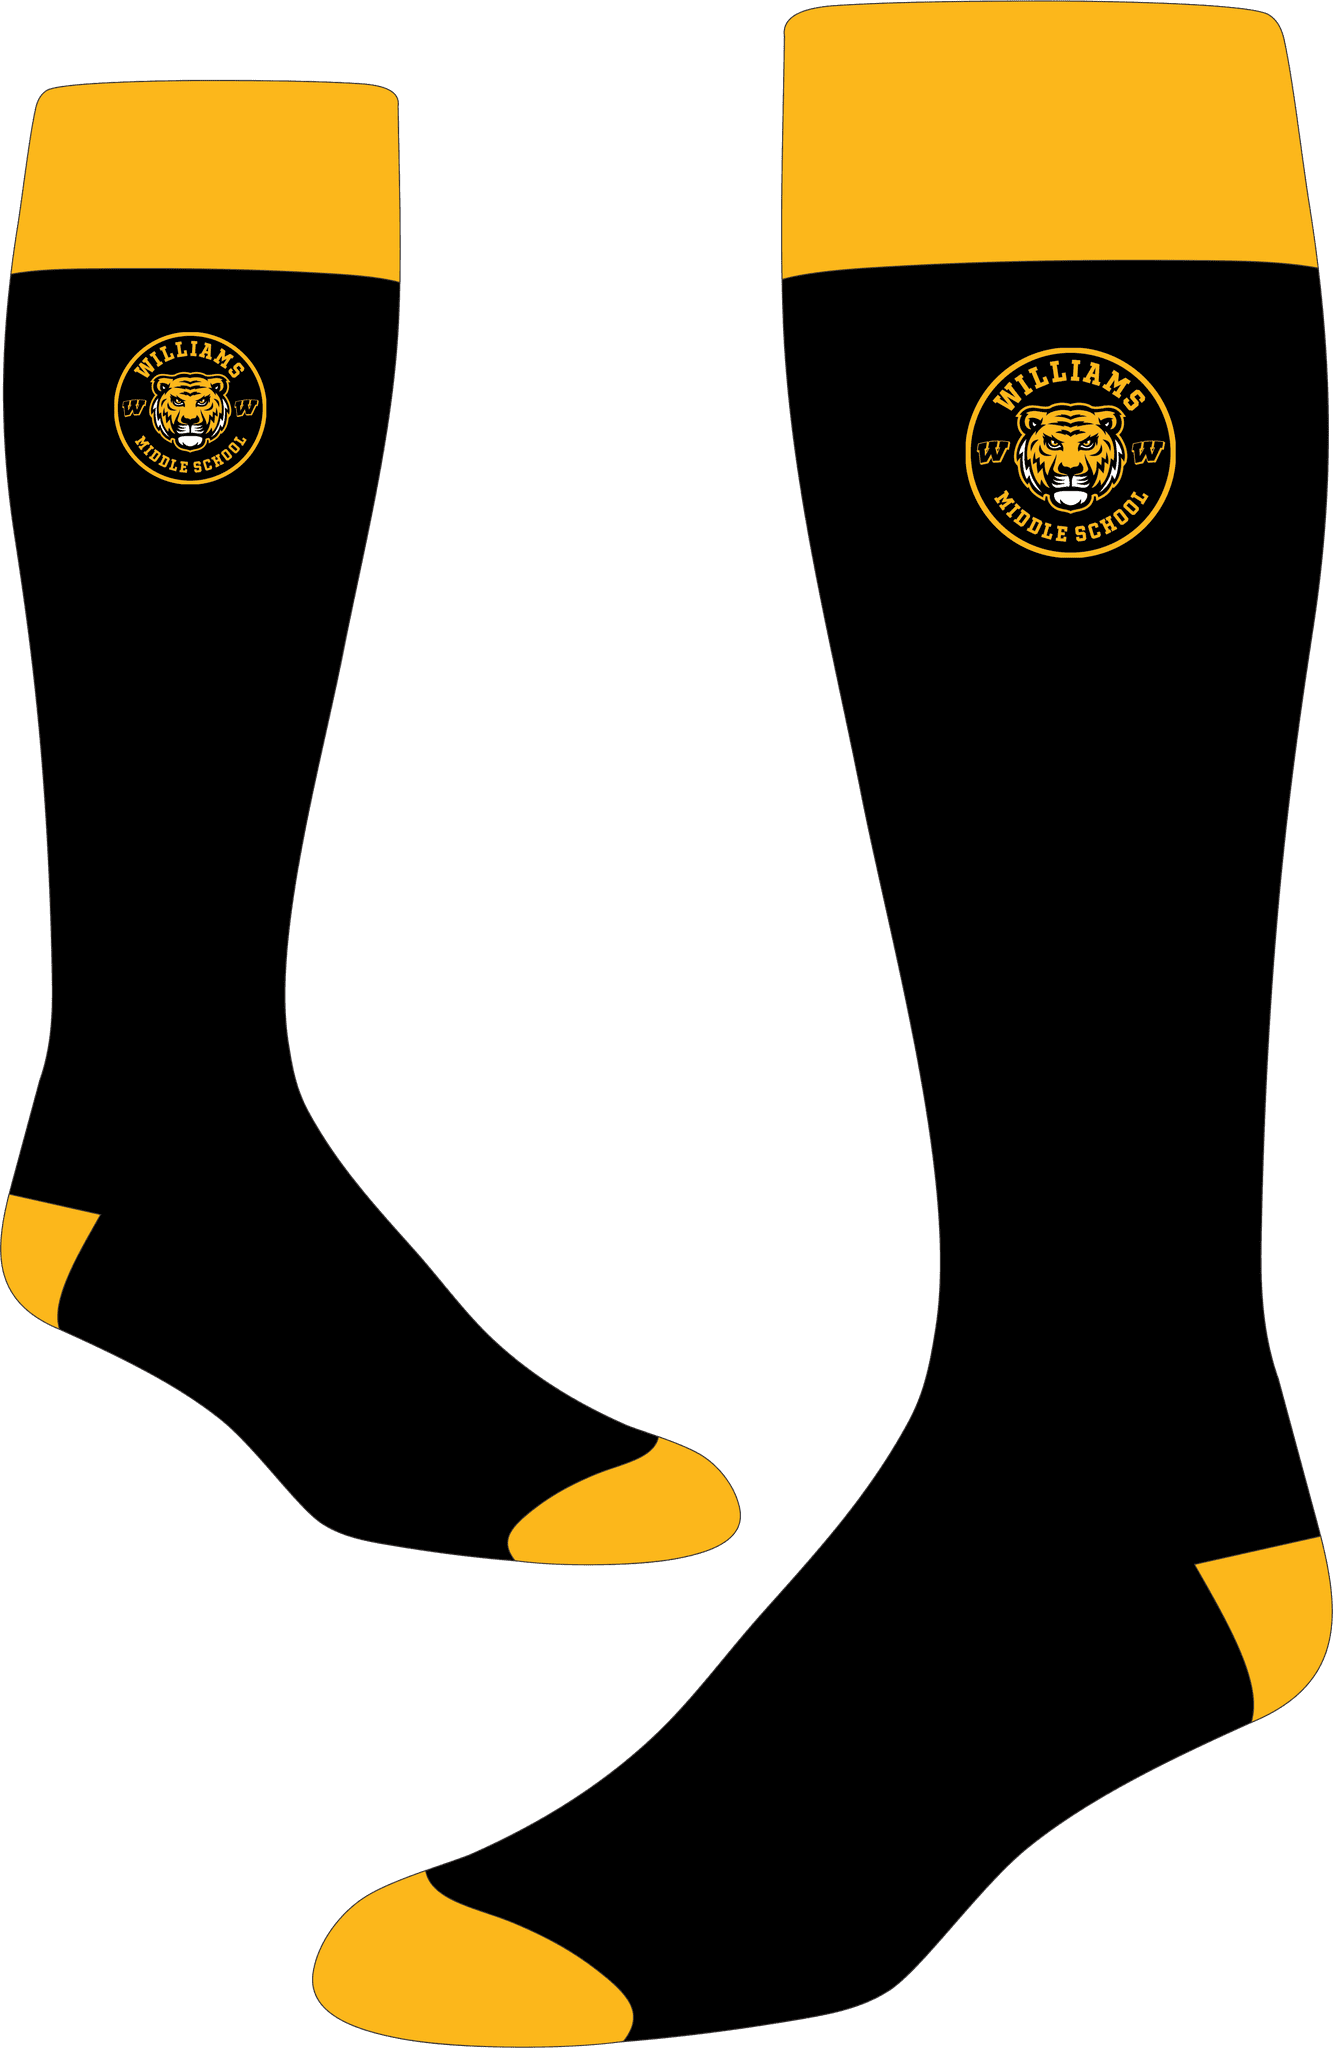 Williams Middle School (Socks)-DaPrintFactory